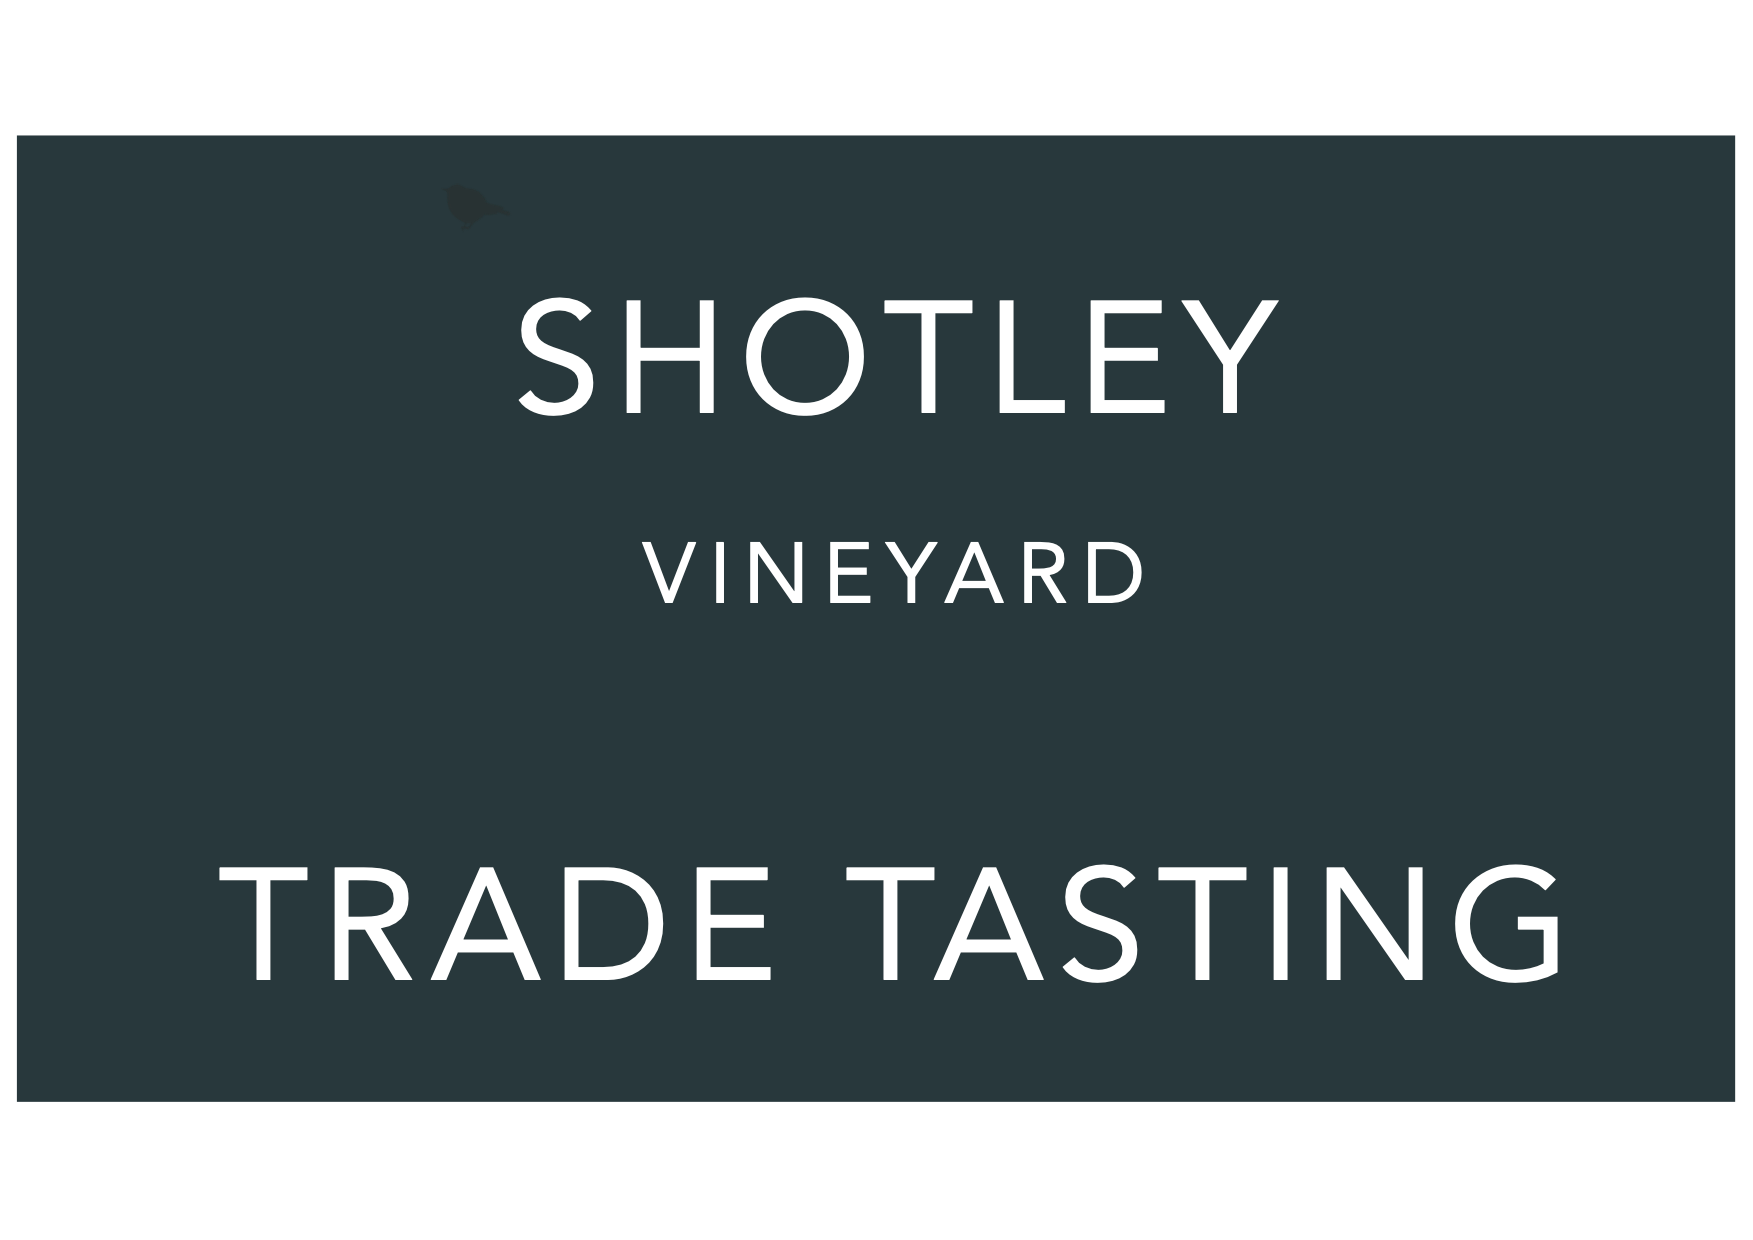 Shotley Vineyard Trade Tasting